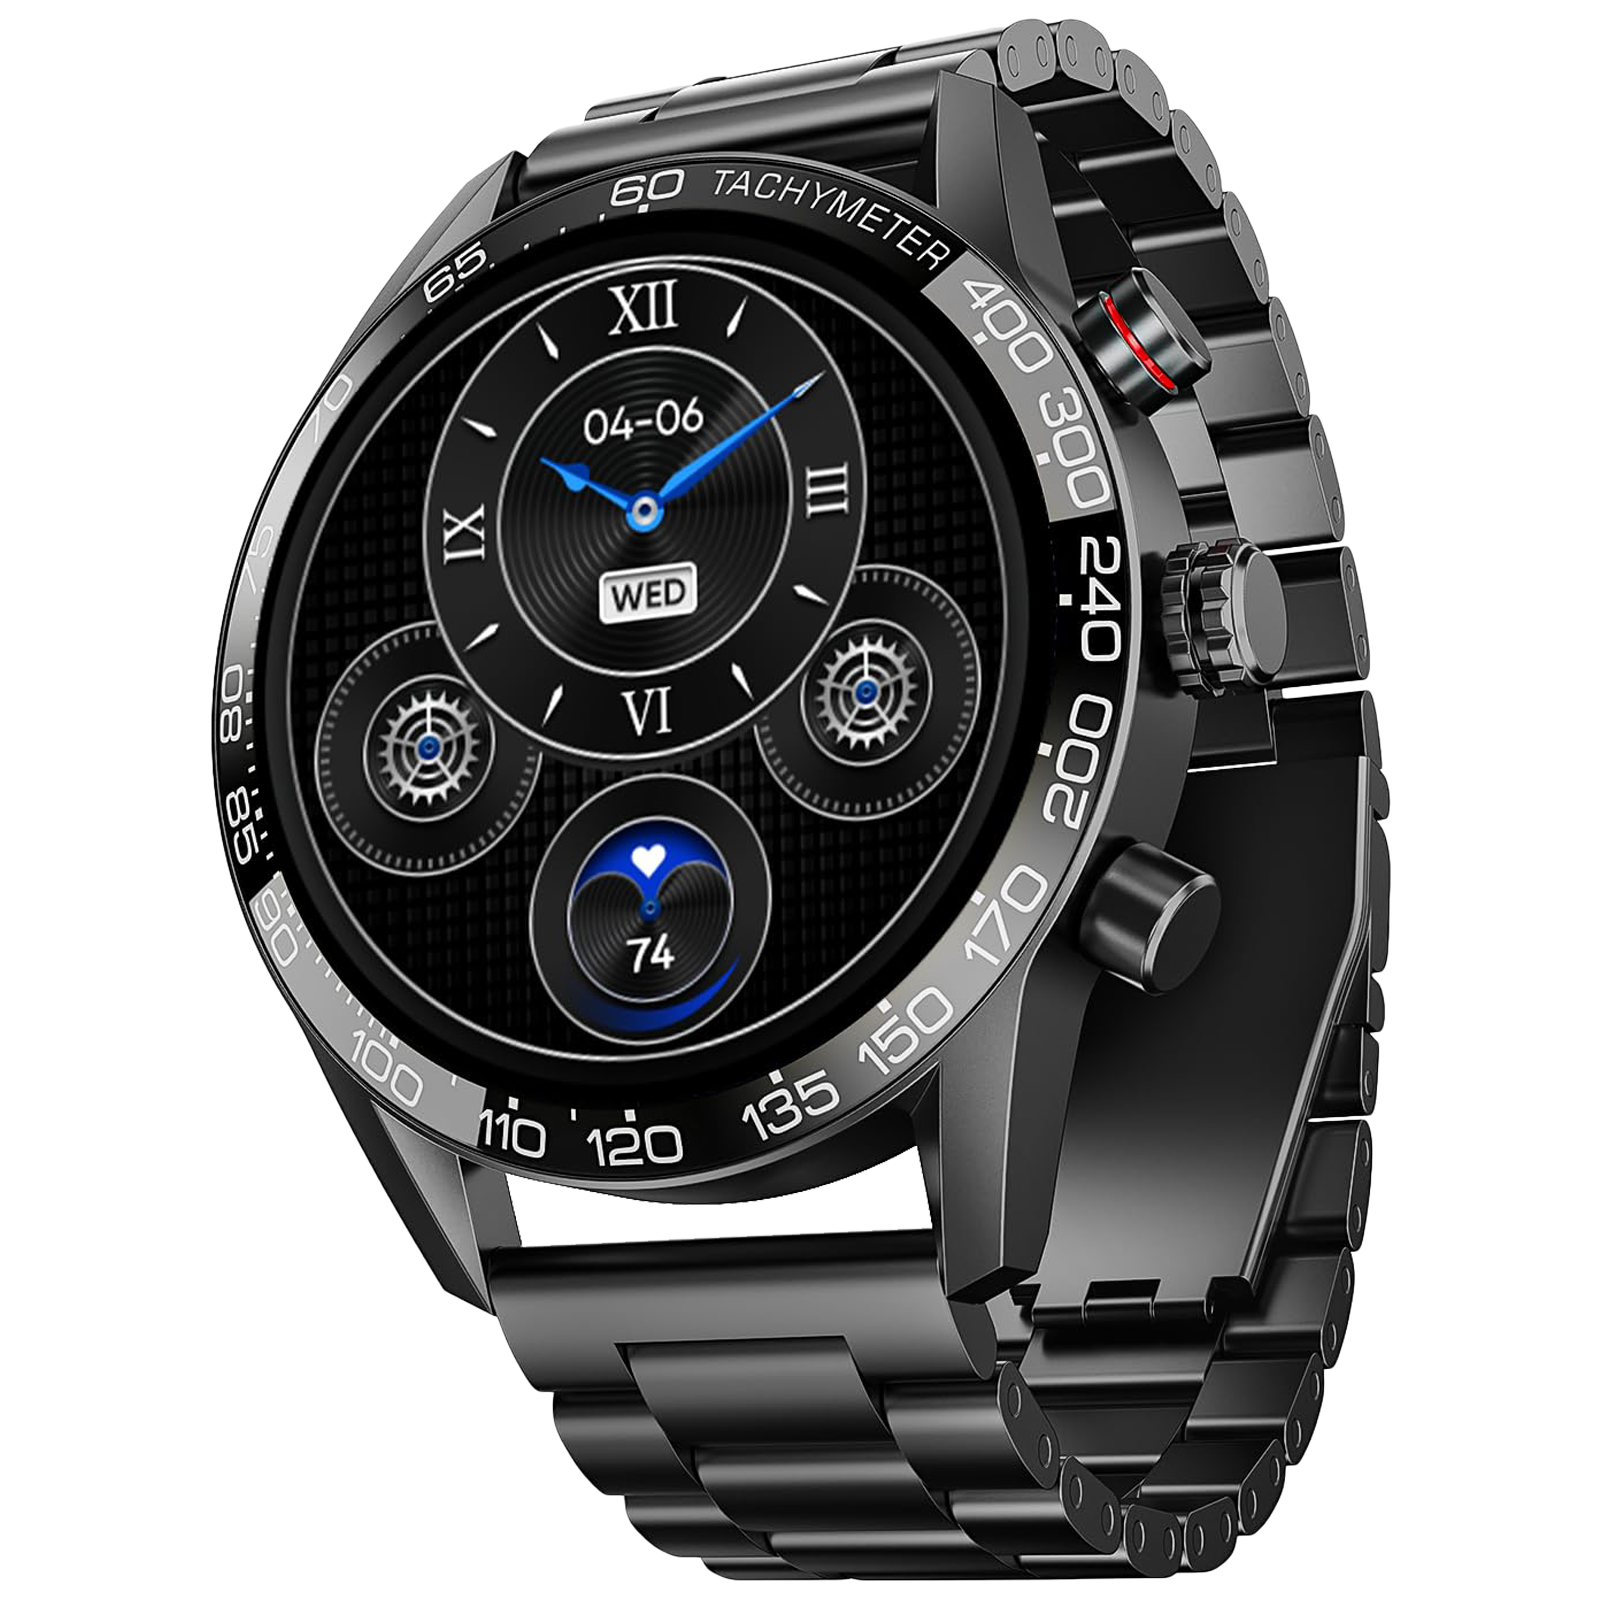 New Wrist Watches Children's Digital Calculator Watch for Kids Students  Gift HOT | eBay